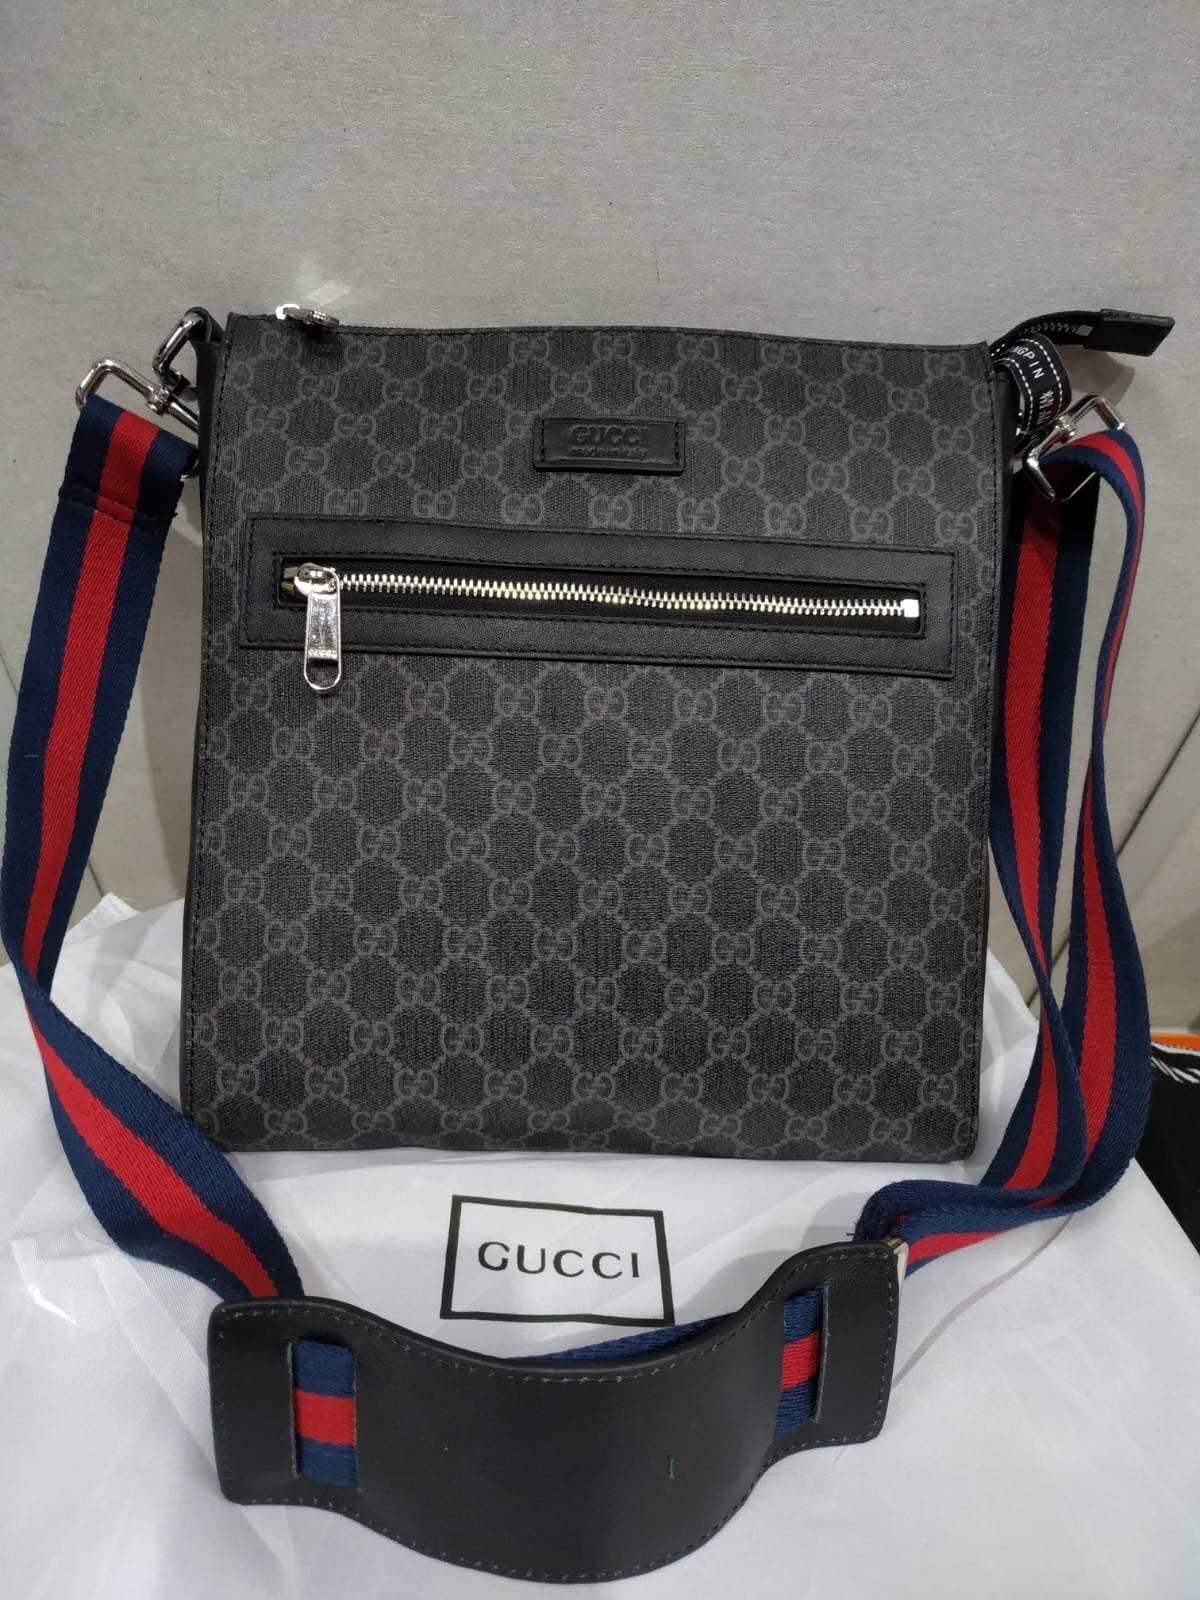 GG Black small messenger bag – Gucci - Top Brand Shopping Store